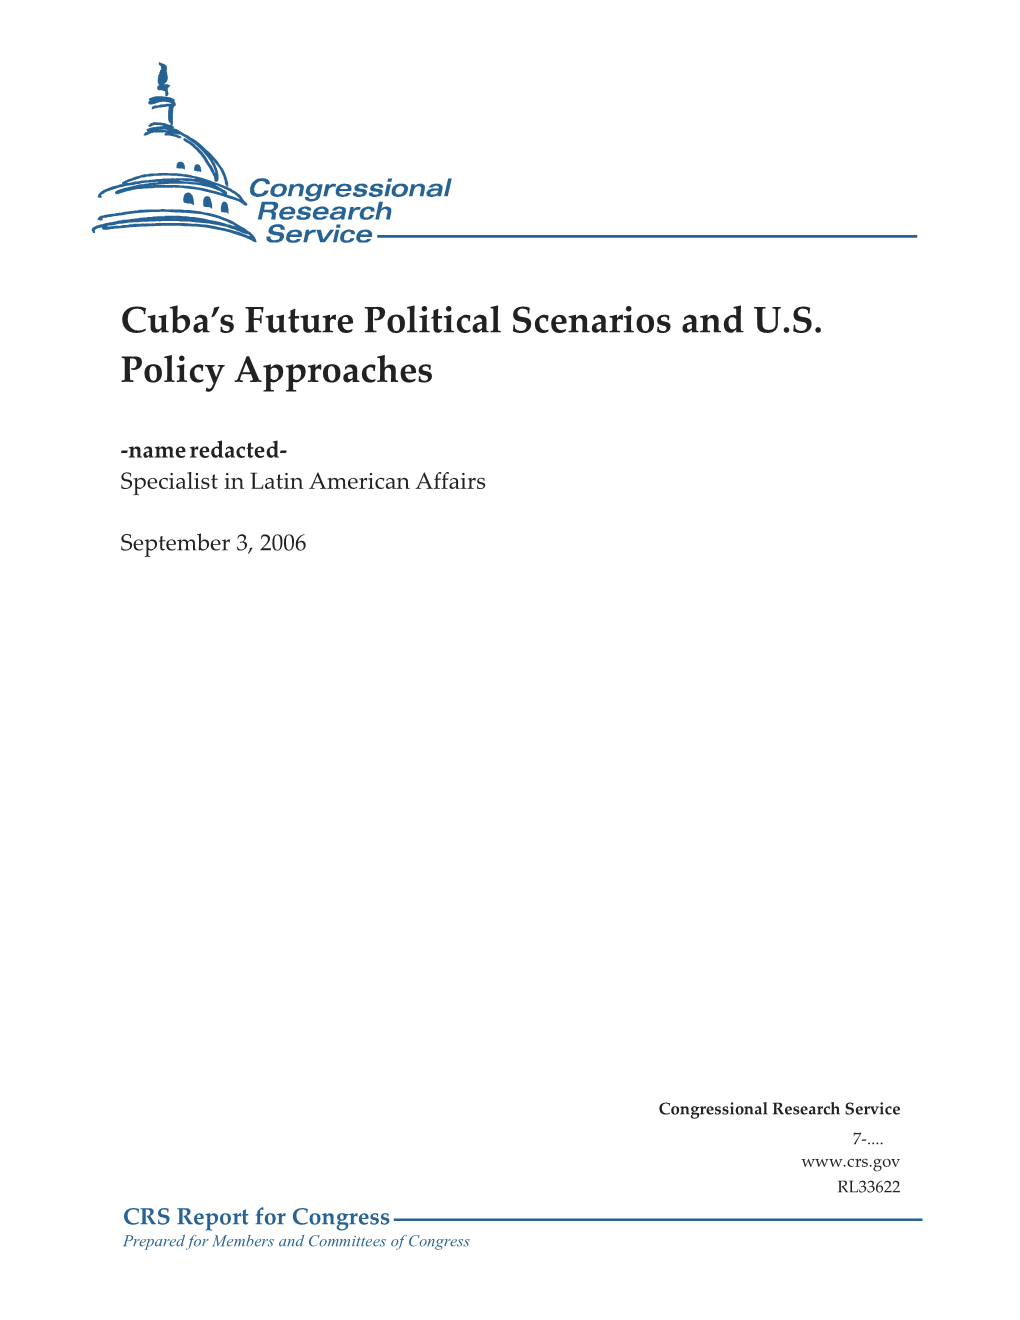 Cuba's Future Political Scenarios and US Policy